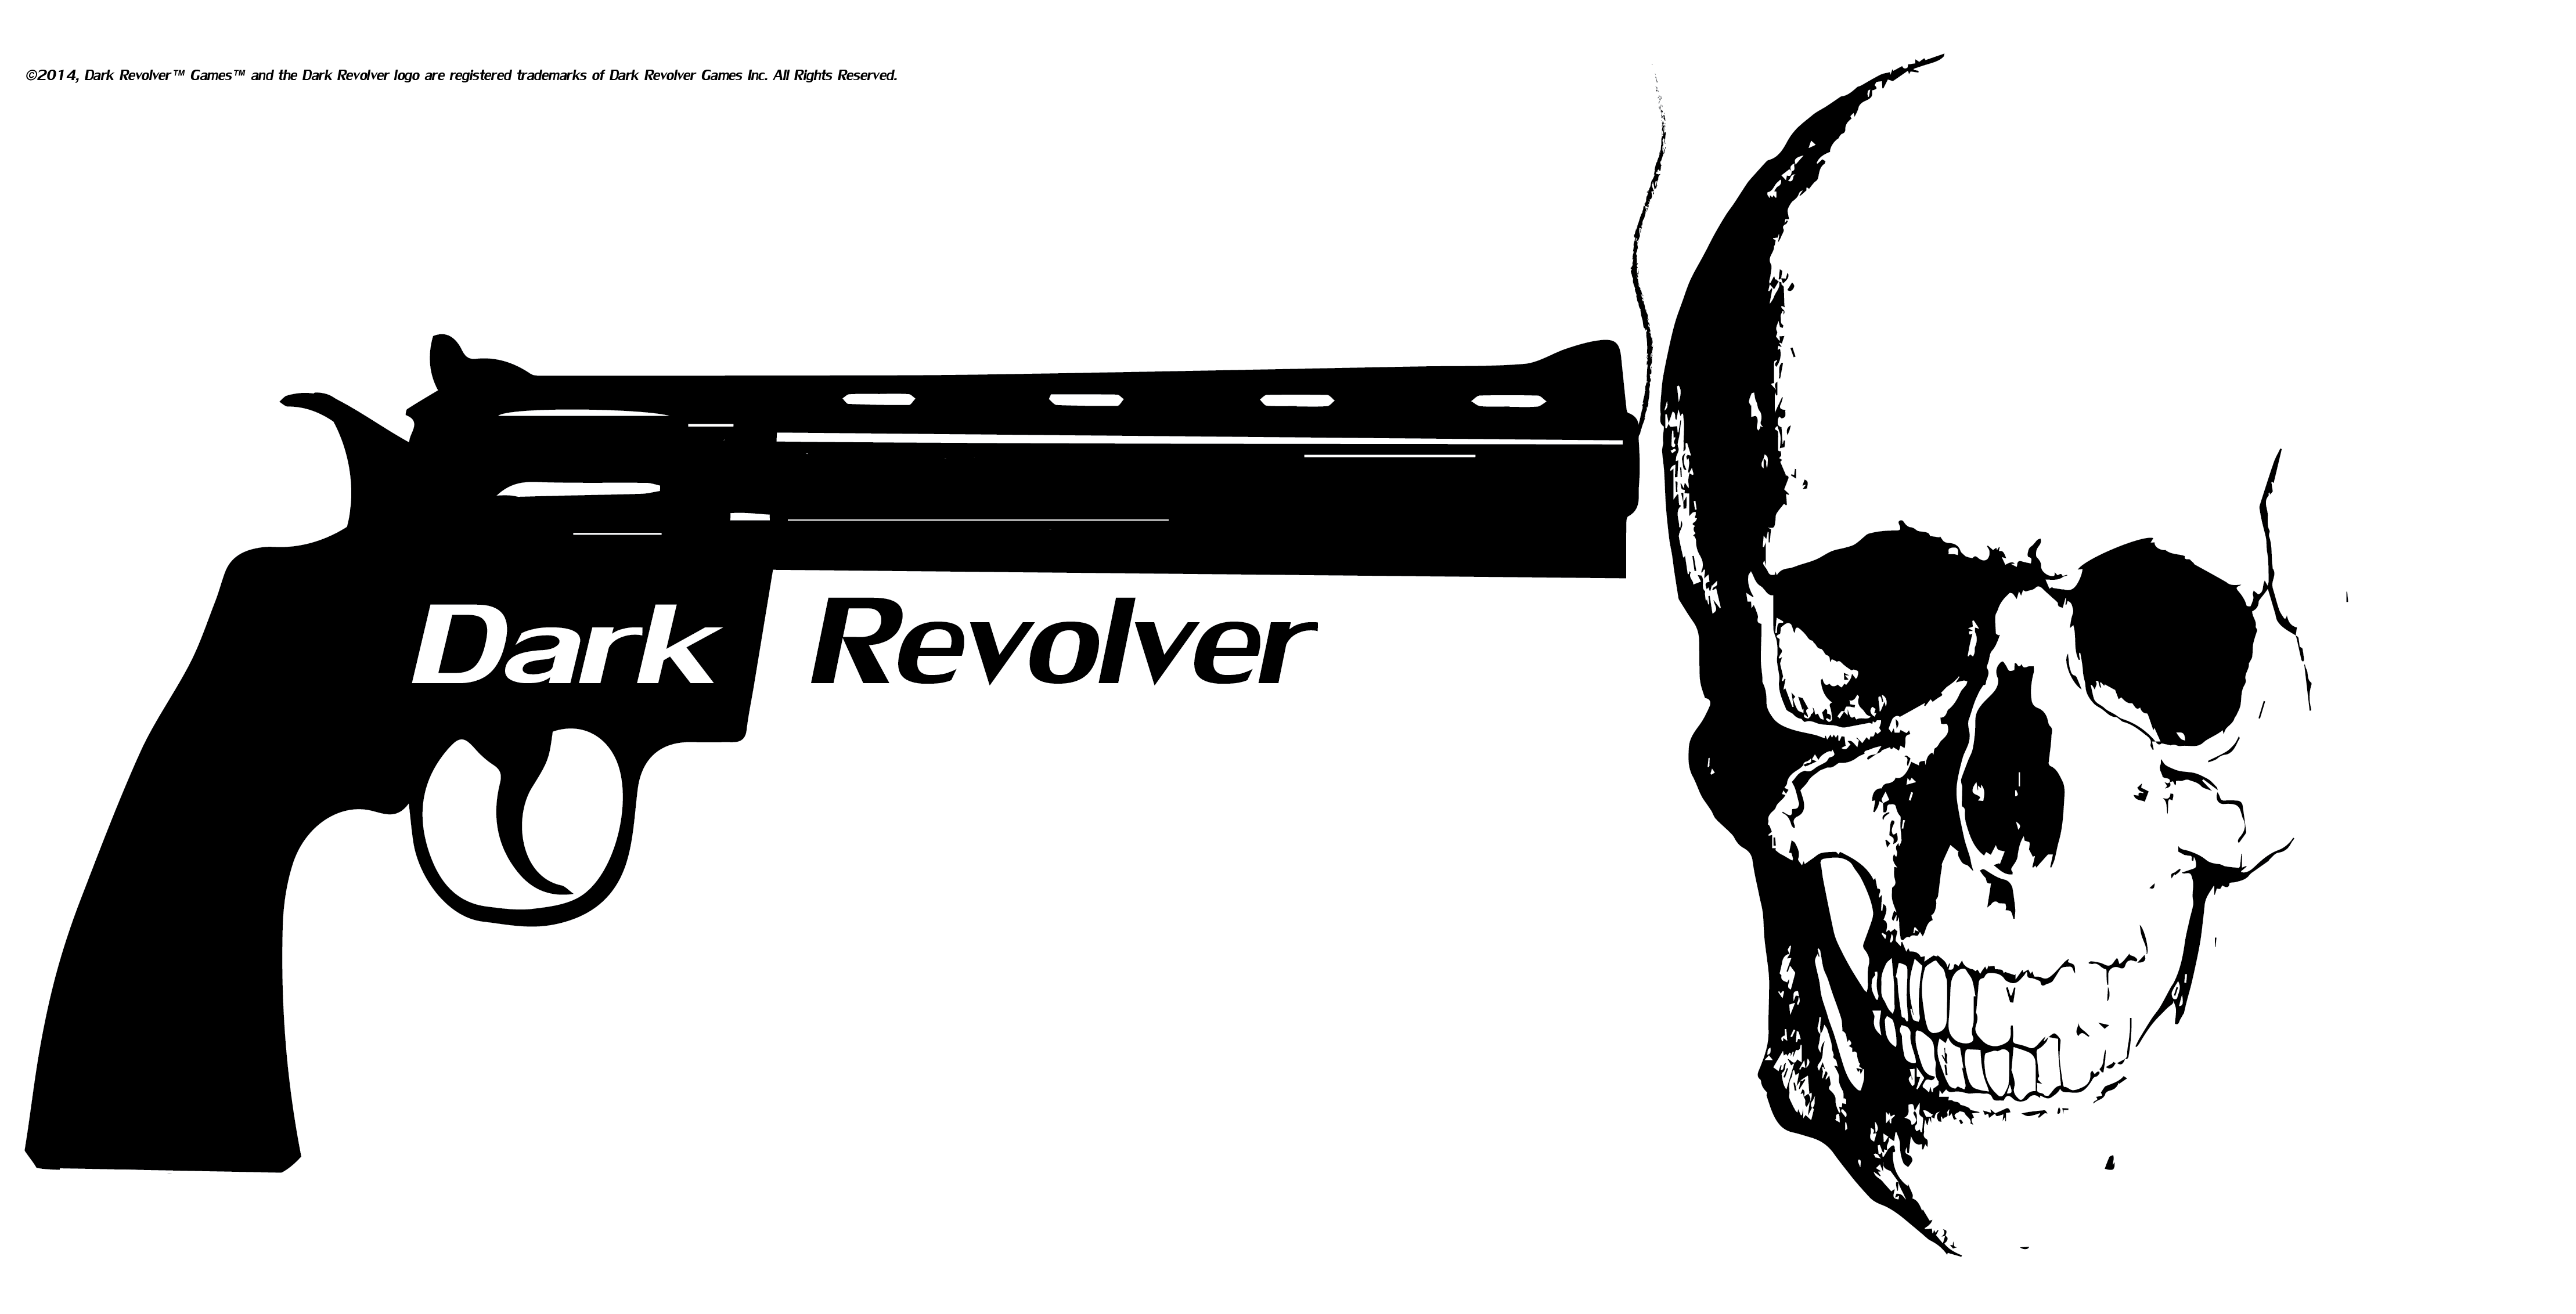 New Dark Revolver Wallpaper! Made by Ryan K! image - Indie DB